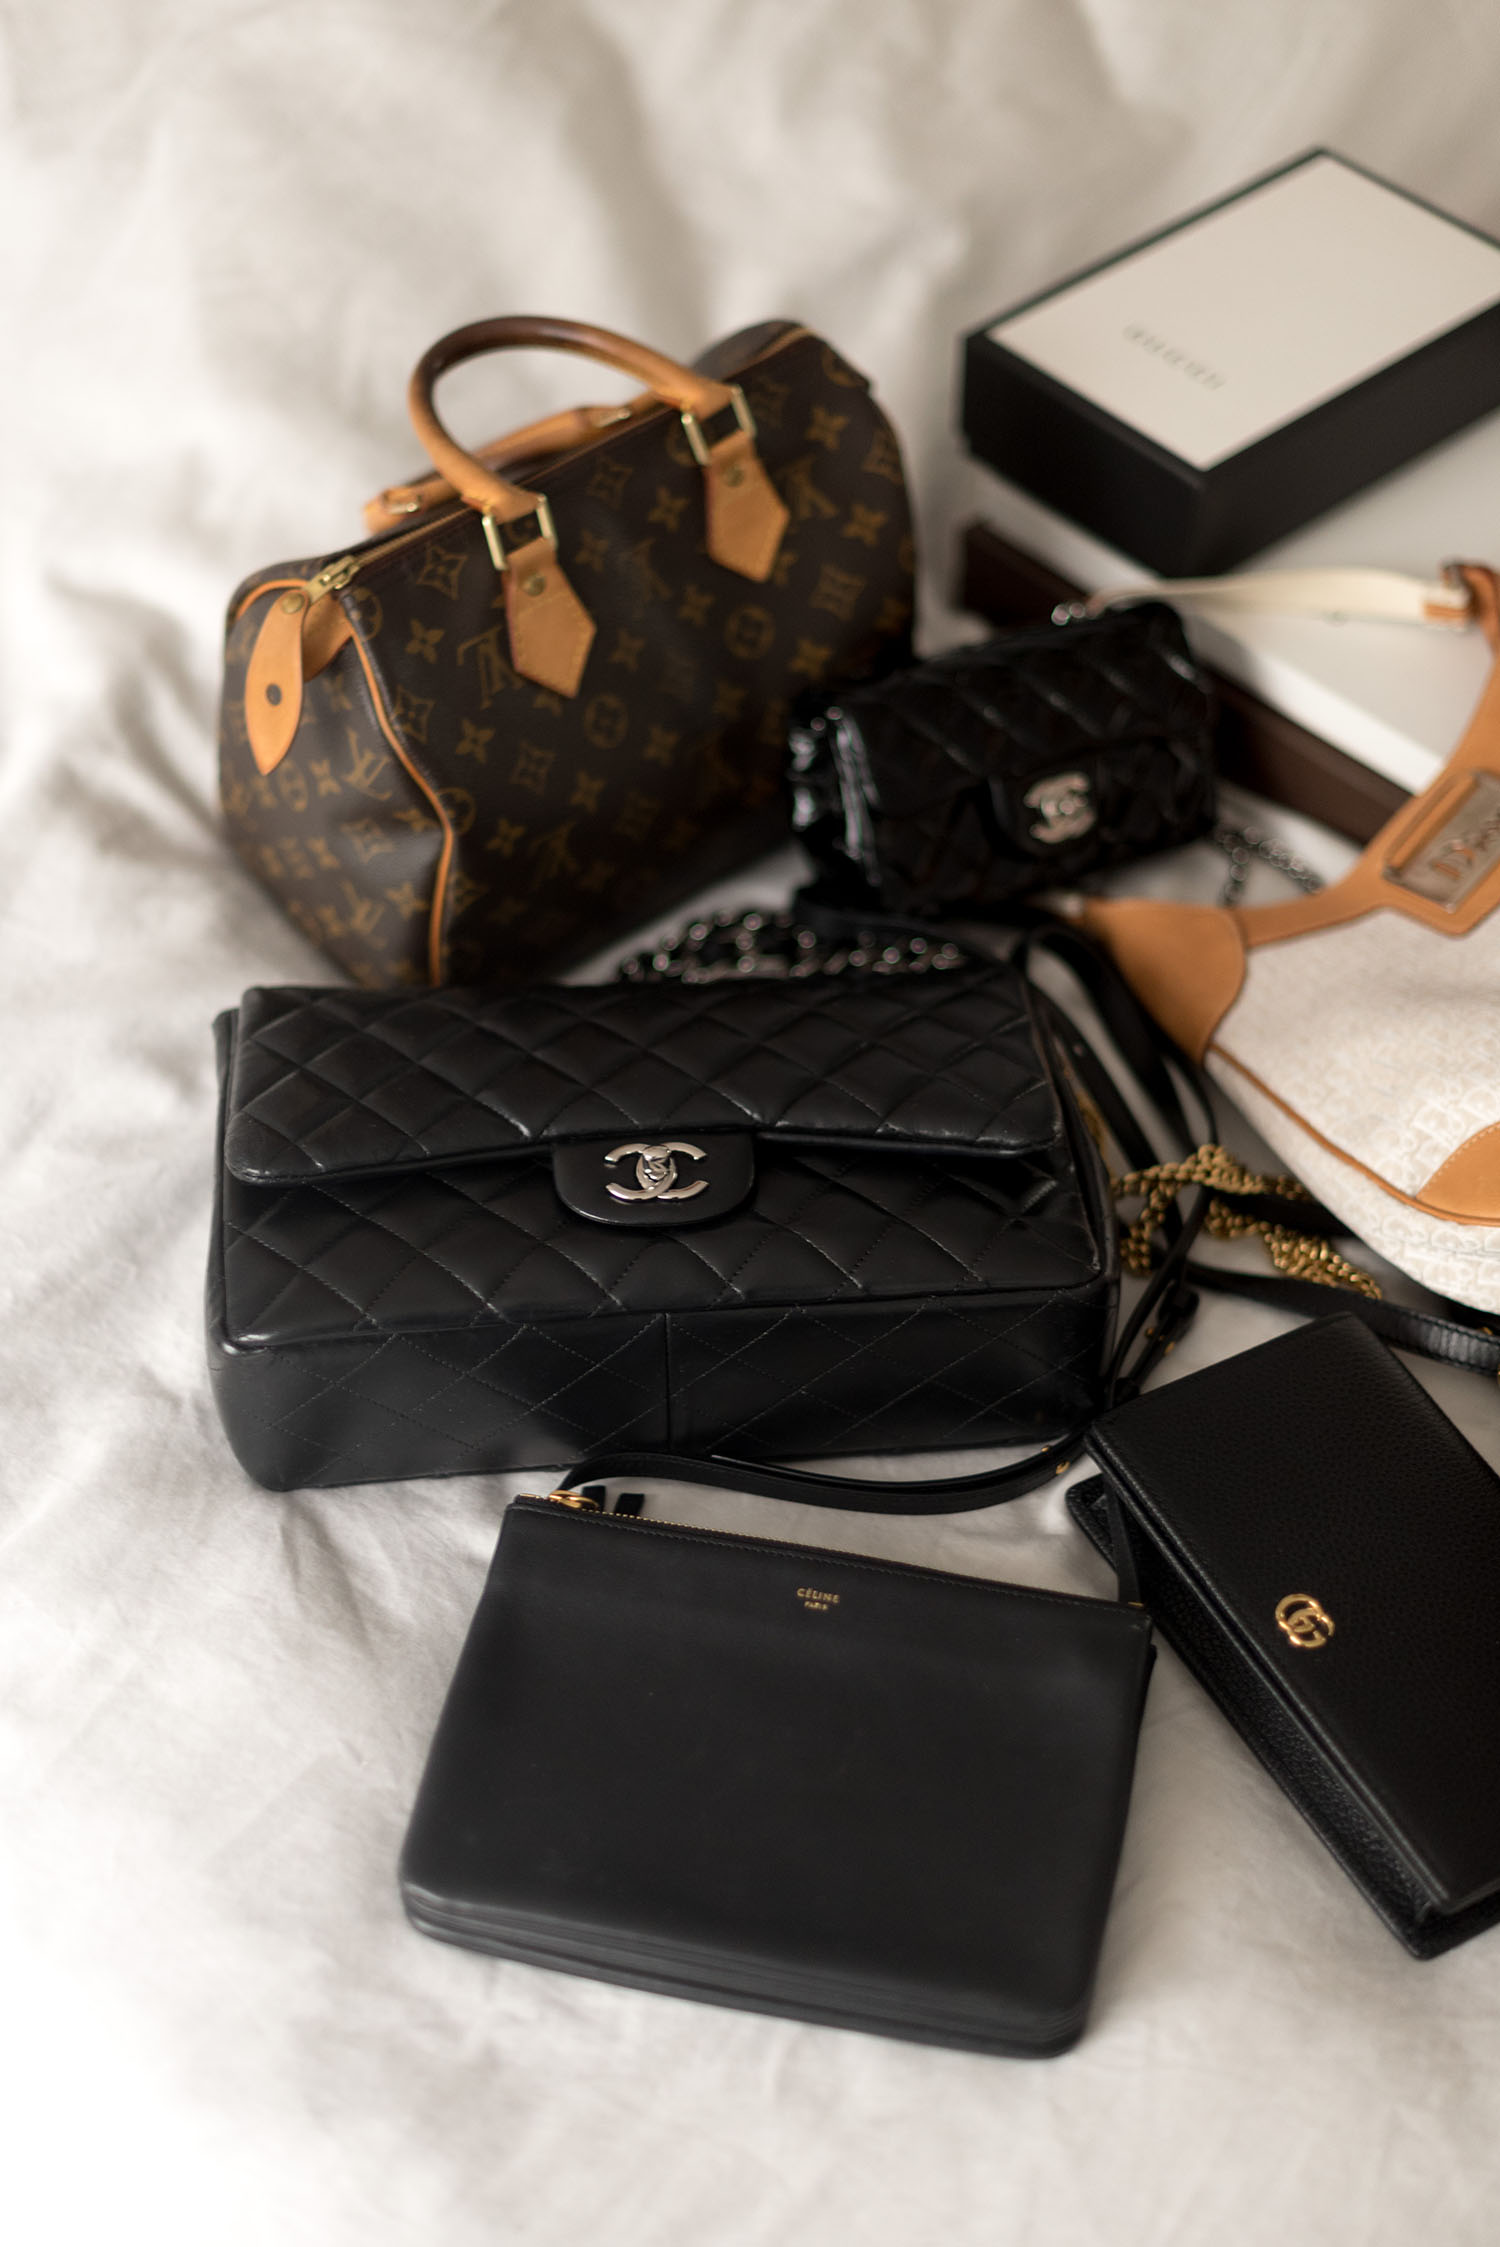 Buying Designer Handbags on a Budget